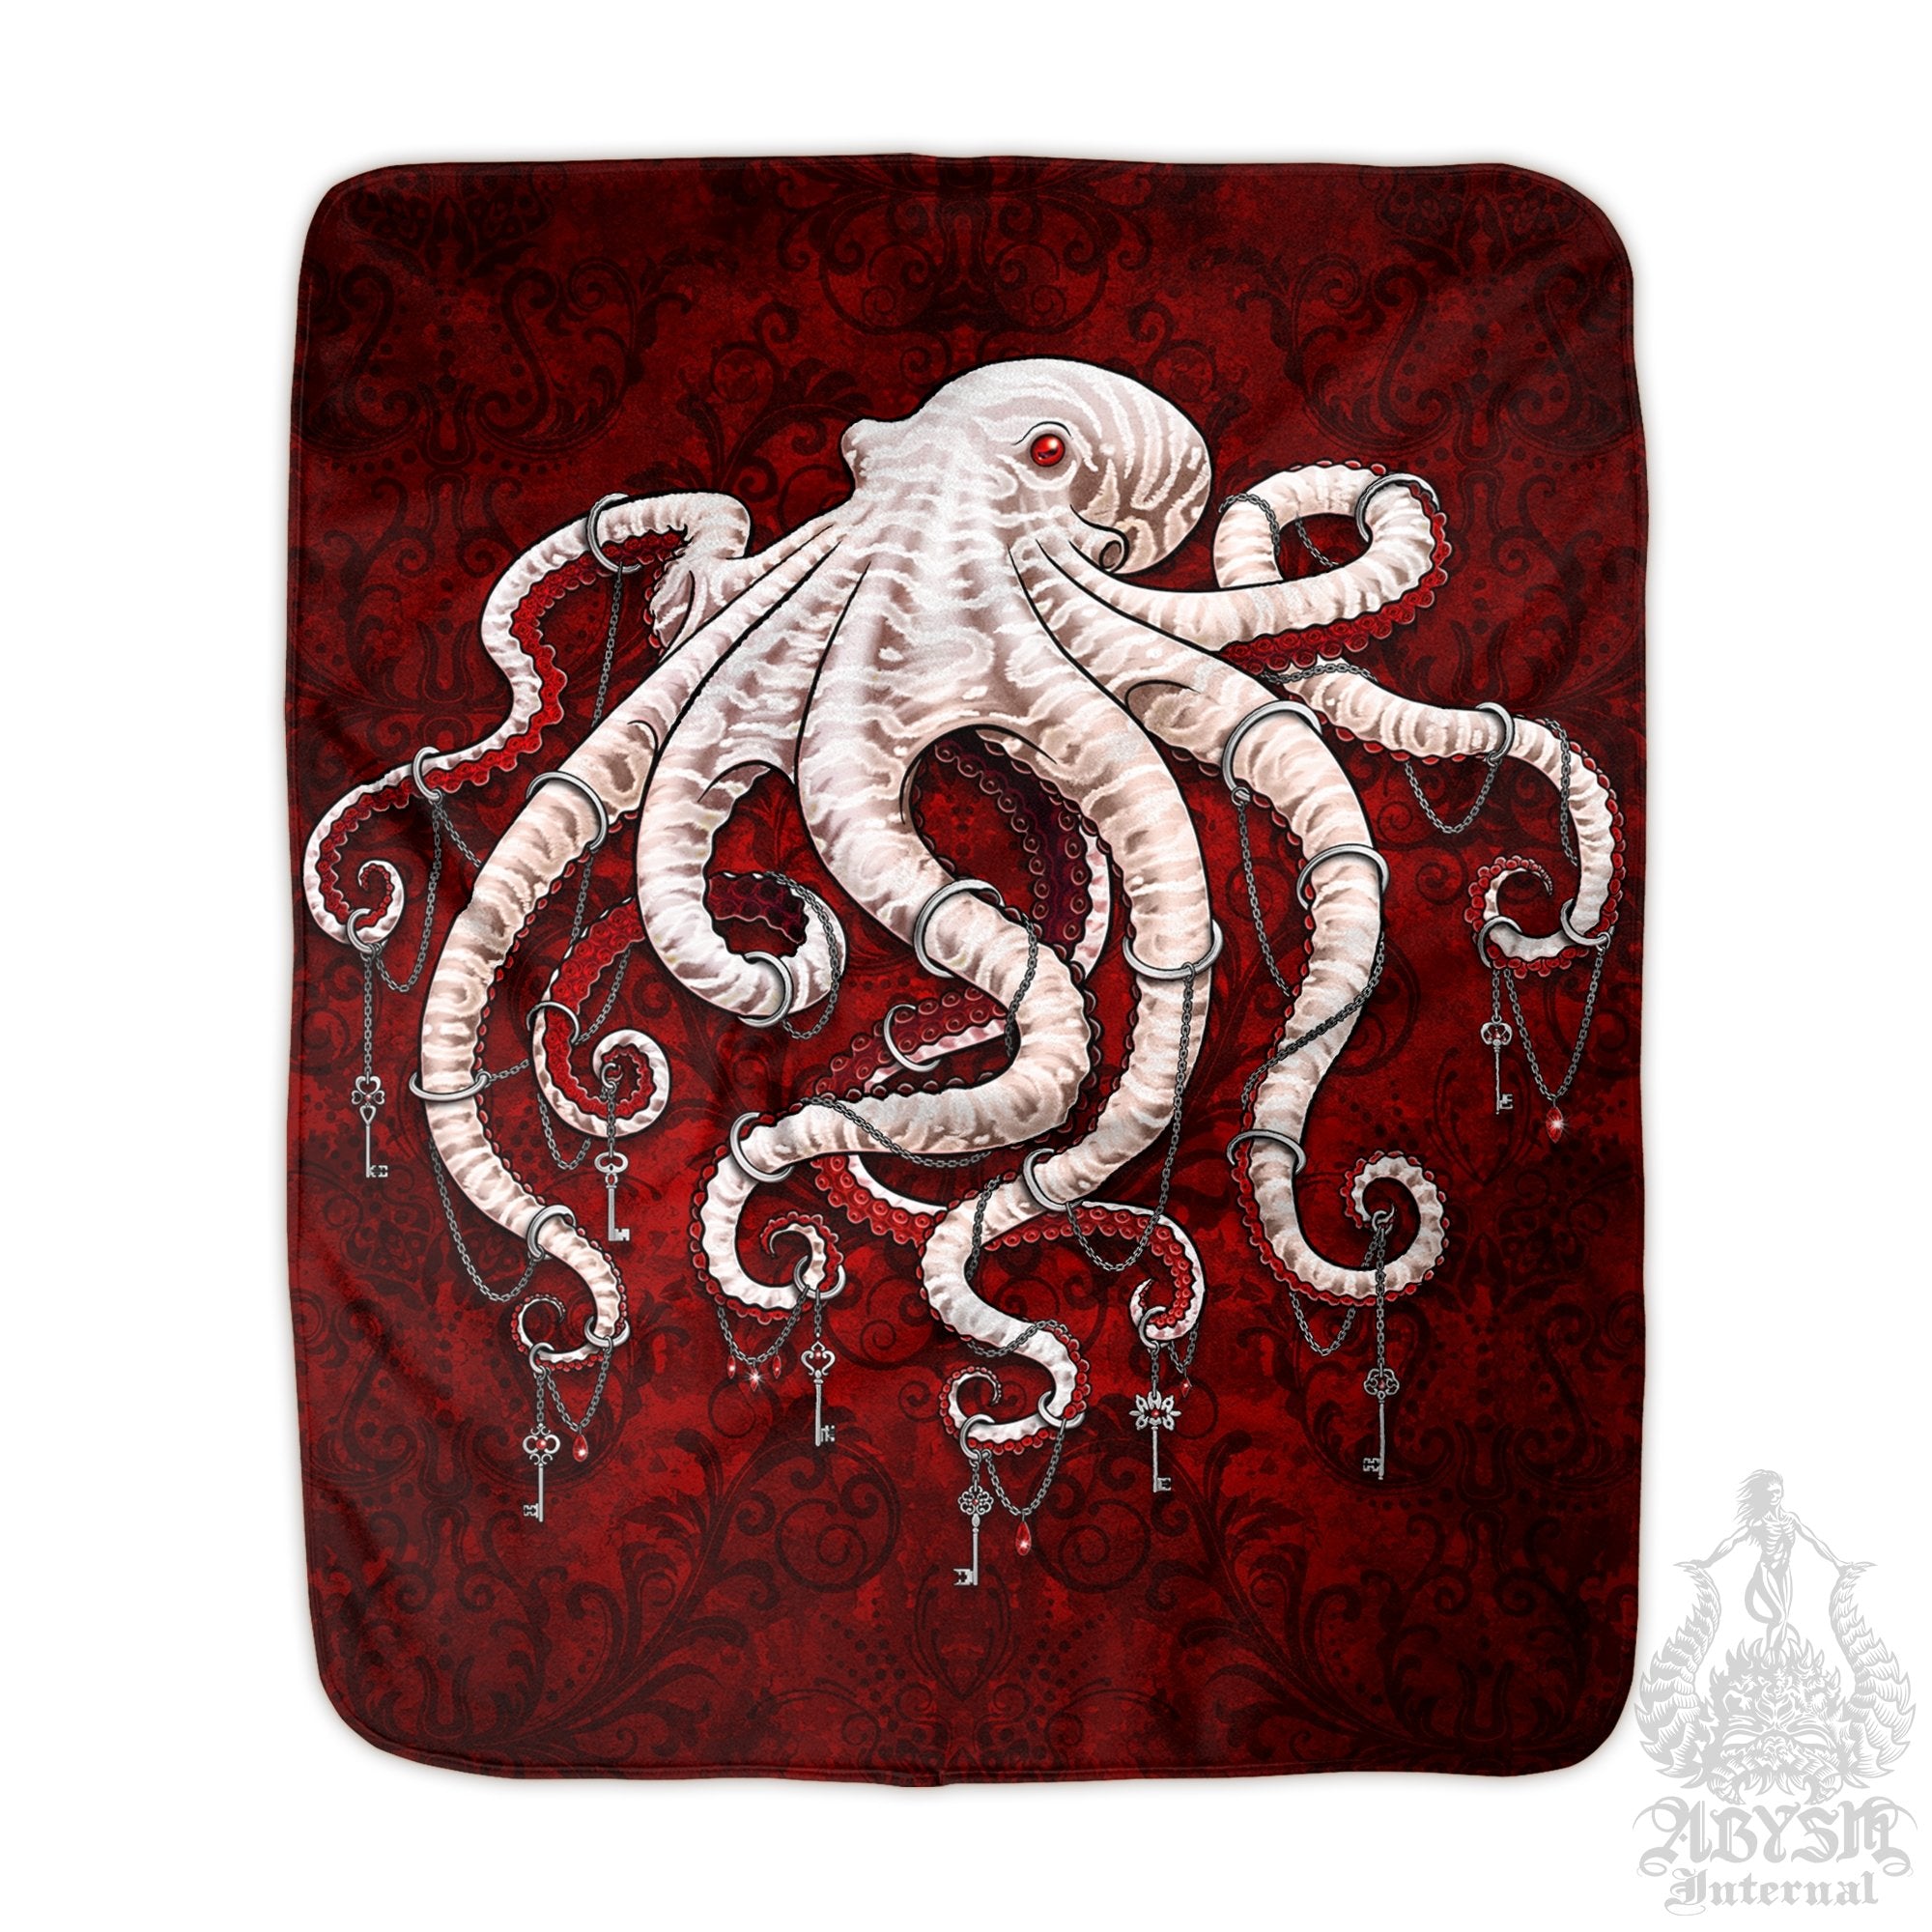 Octopus Throw Fleece Blanket, Gothic Gift, Goth Home Decor - Bloody Red - Abysm Internal